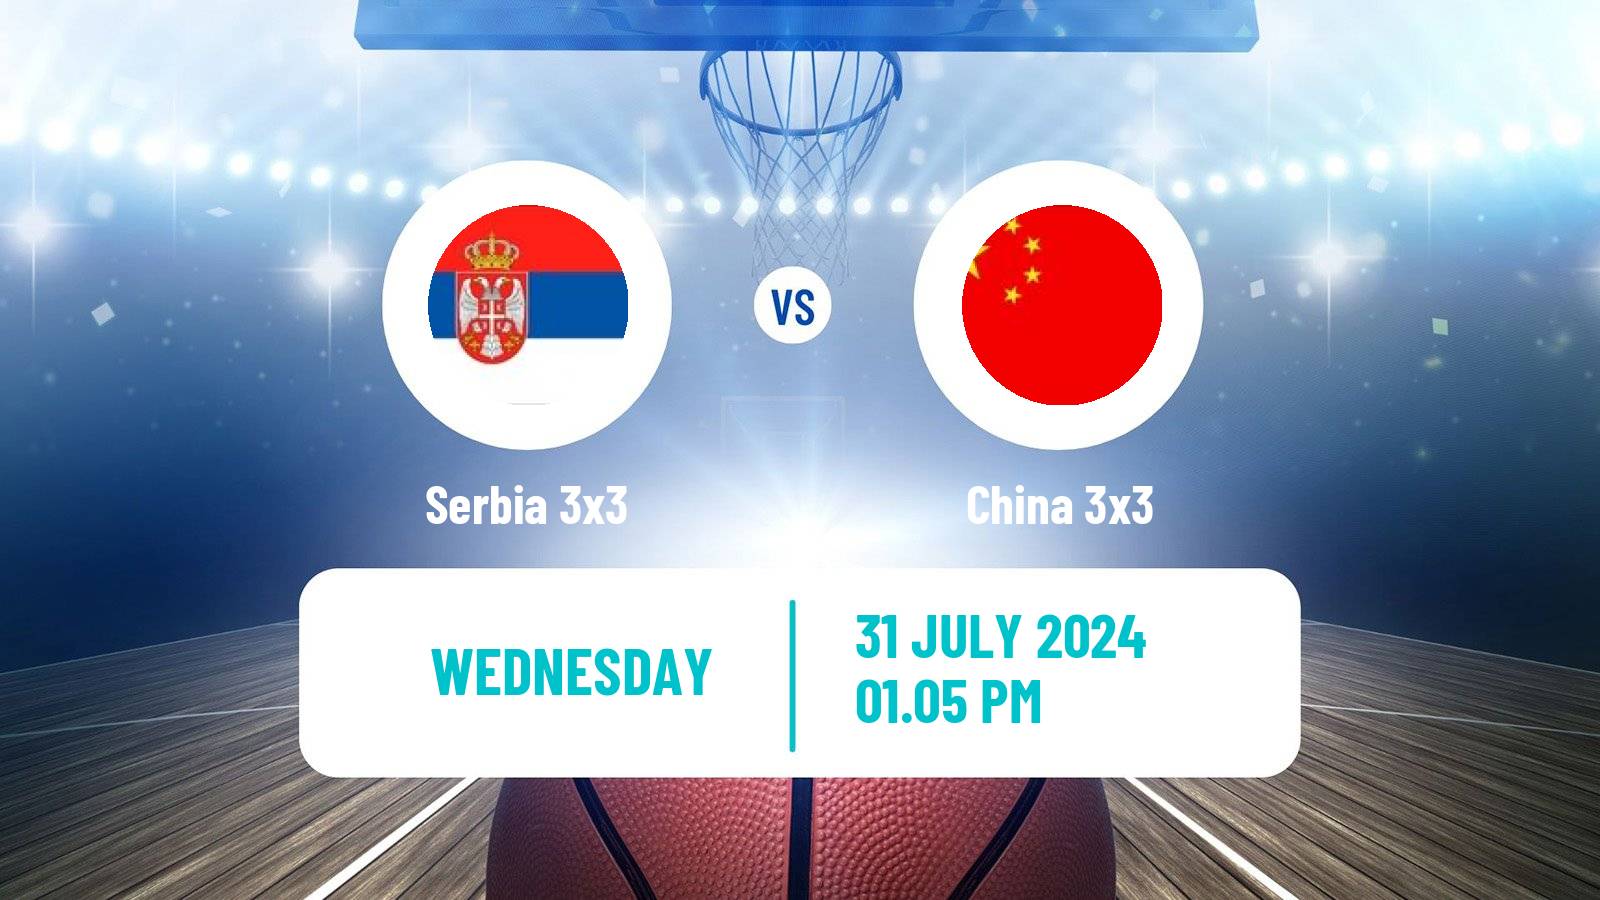 Basketball Olympic Games Basketball 3x3 Serbia 3x3 - China 3x3